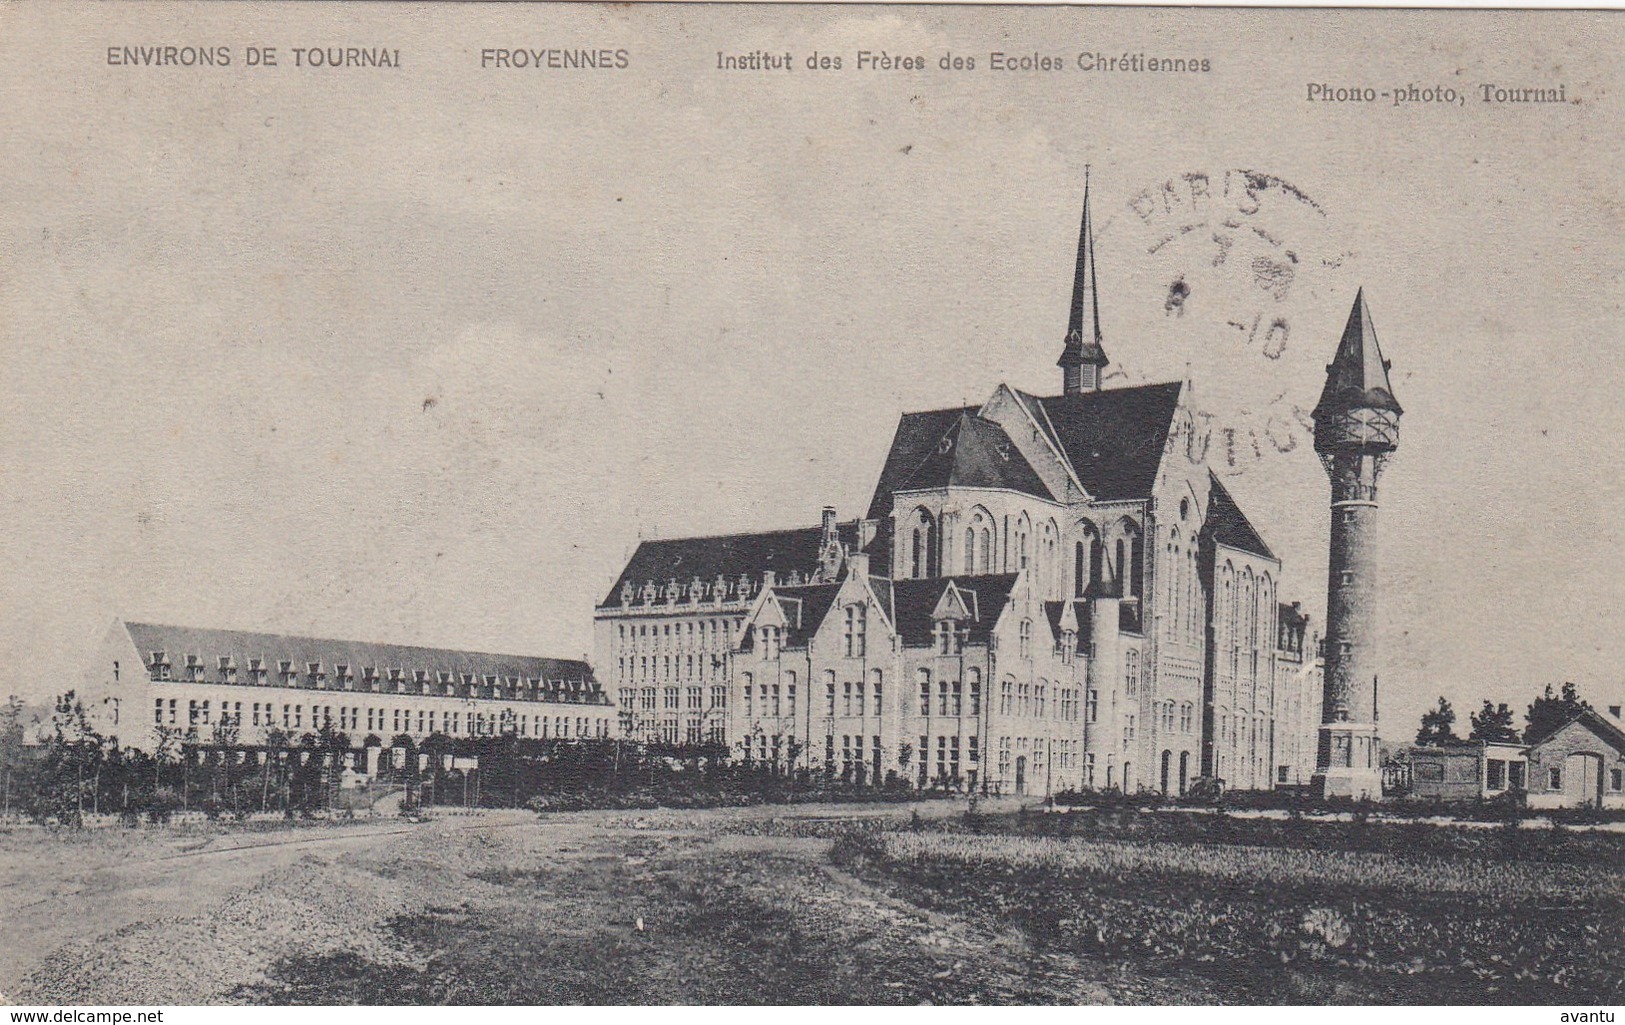 TOURNAI / FROYENNES / INSTITUT DES FRERES DES ECOLES CHRETIENNES 1911 - Tournai